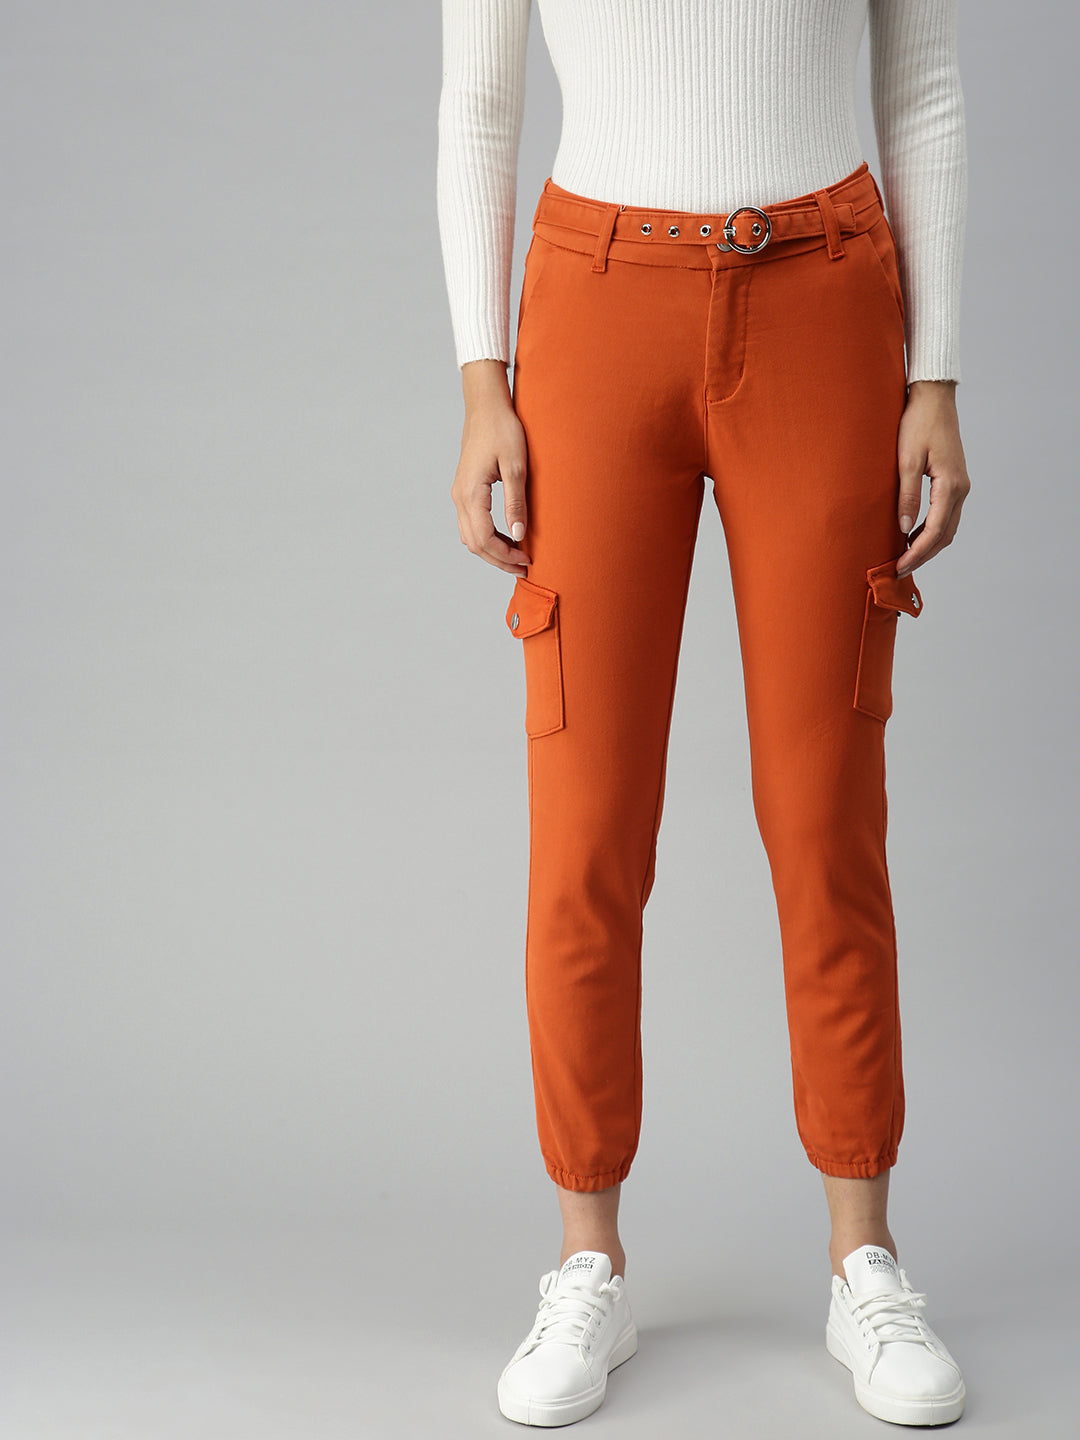 Women's Orange Solid Denim Jeans